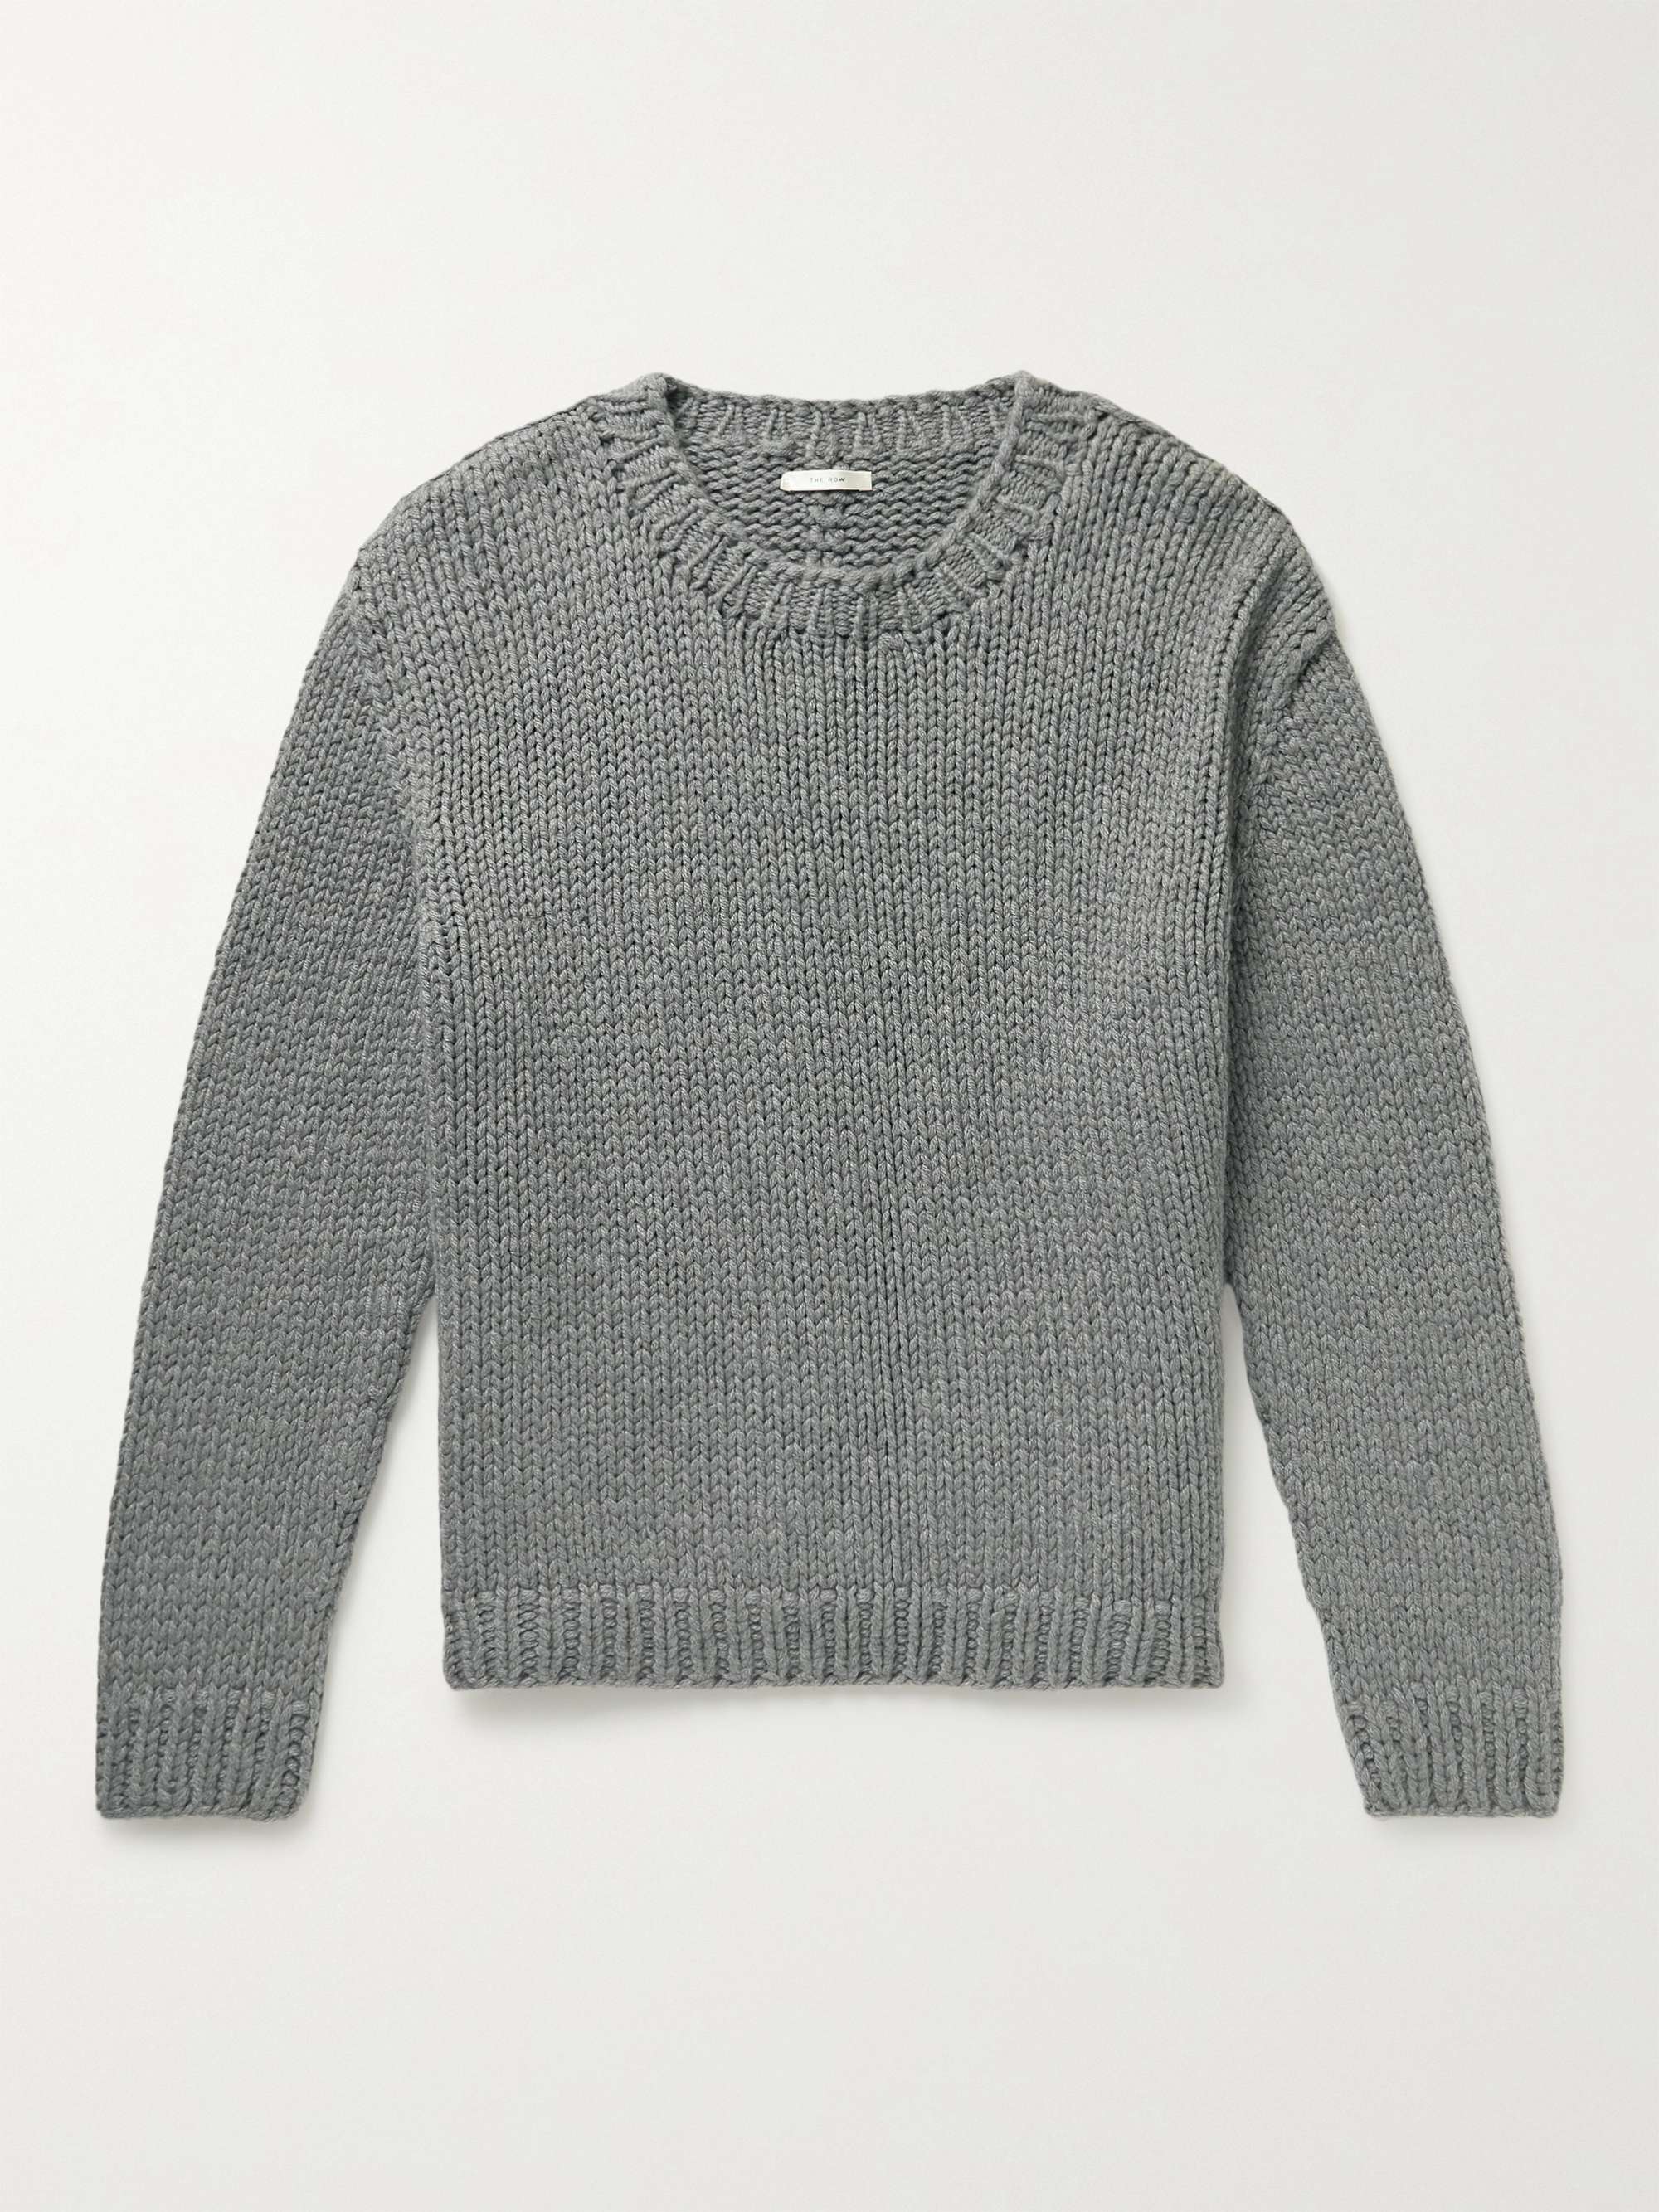 THE ROW Darone Cashmere Sweater